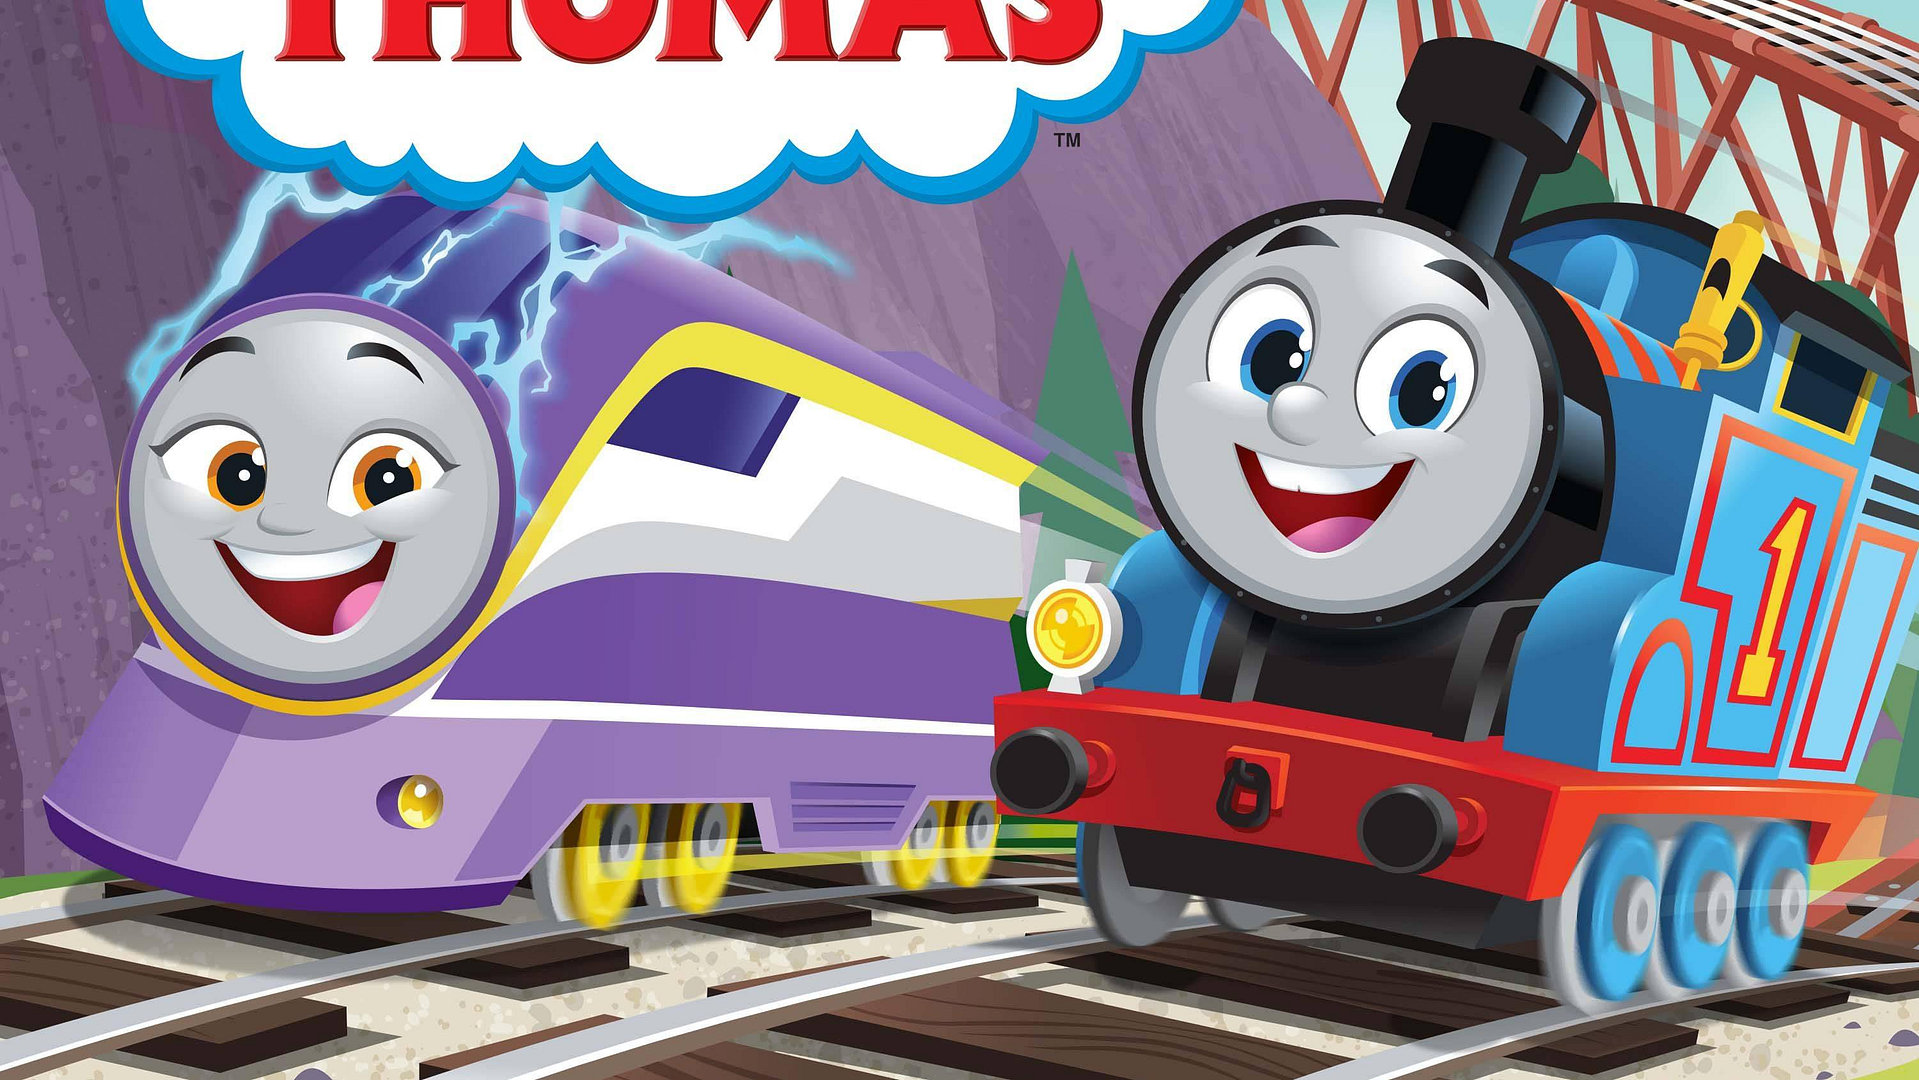 Thomas' nye utsikt